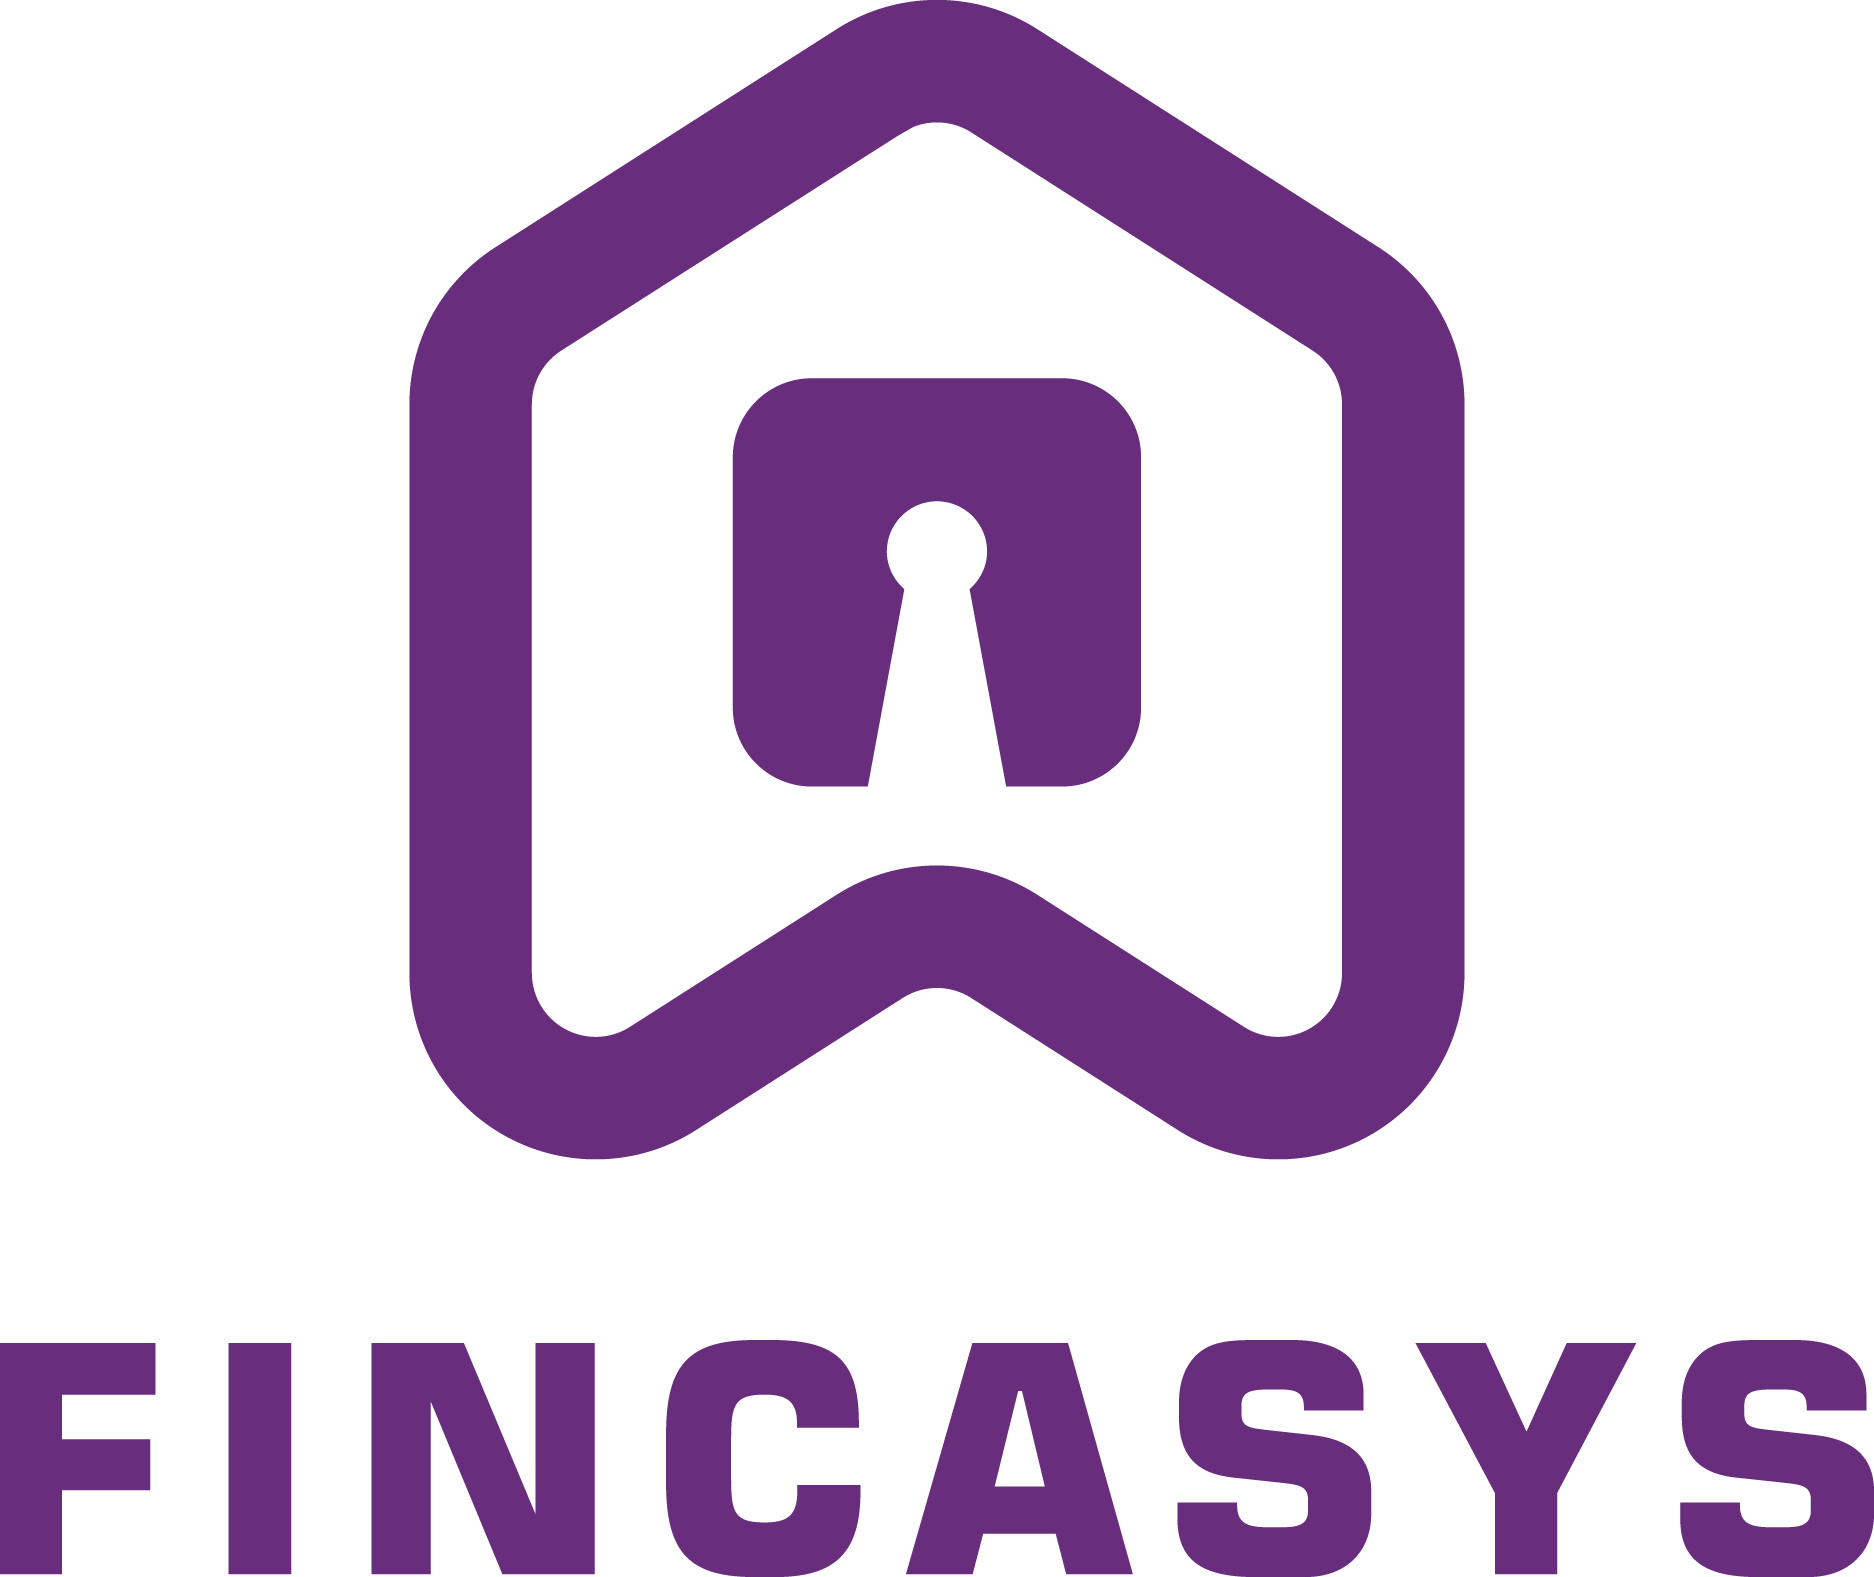 Fincasys App